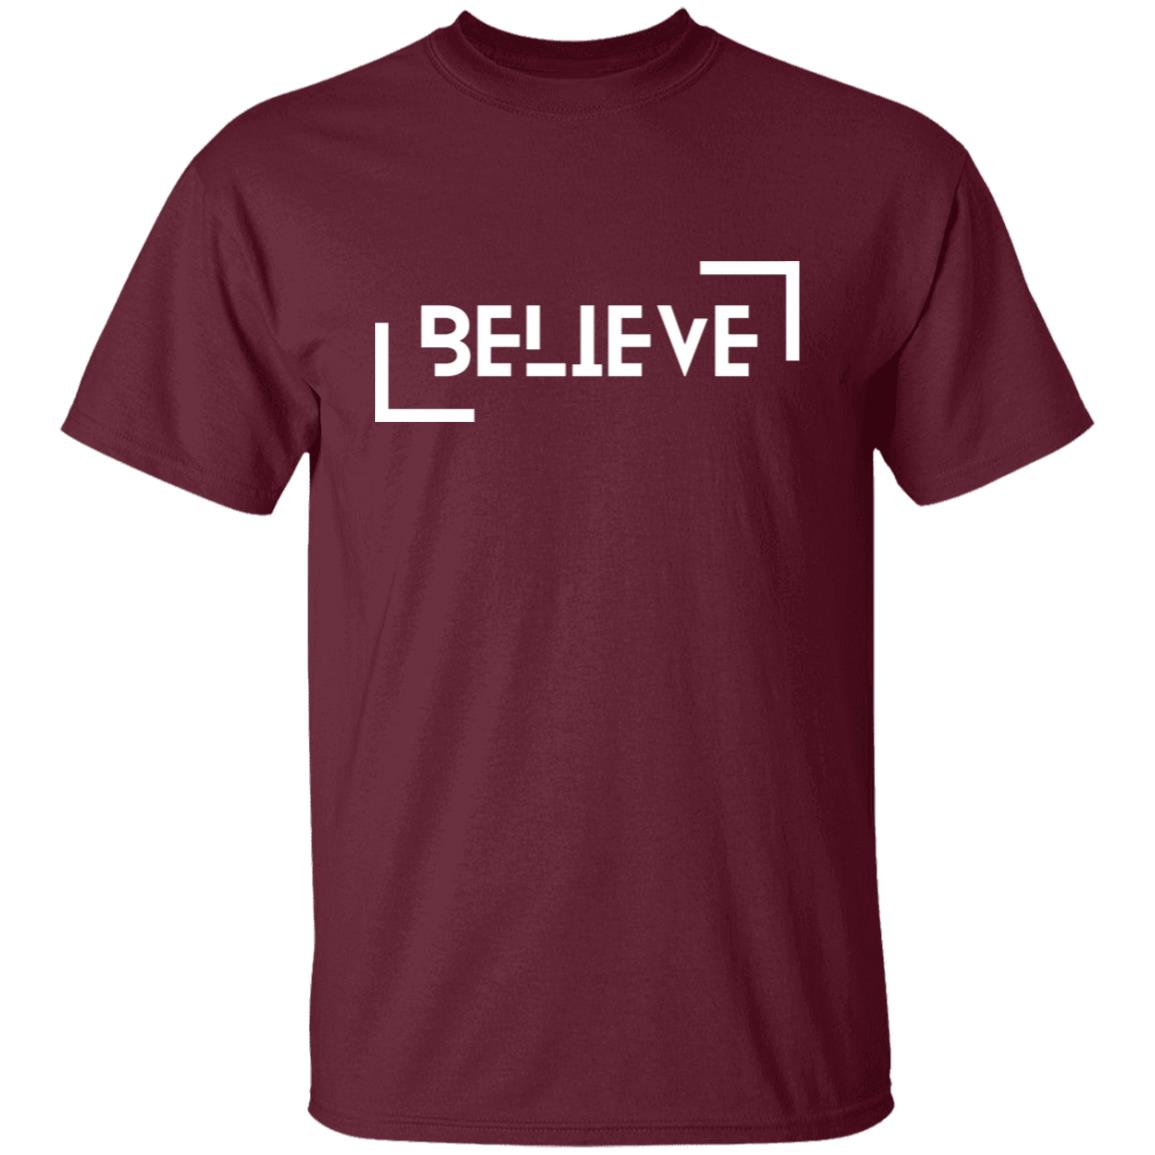 Believe - T Shirts